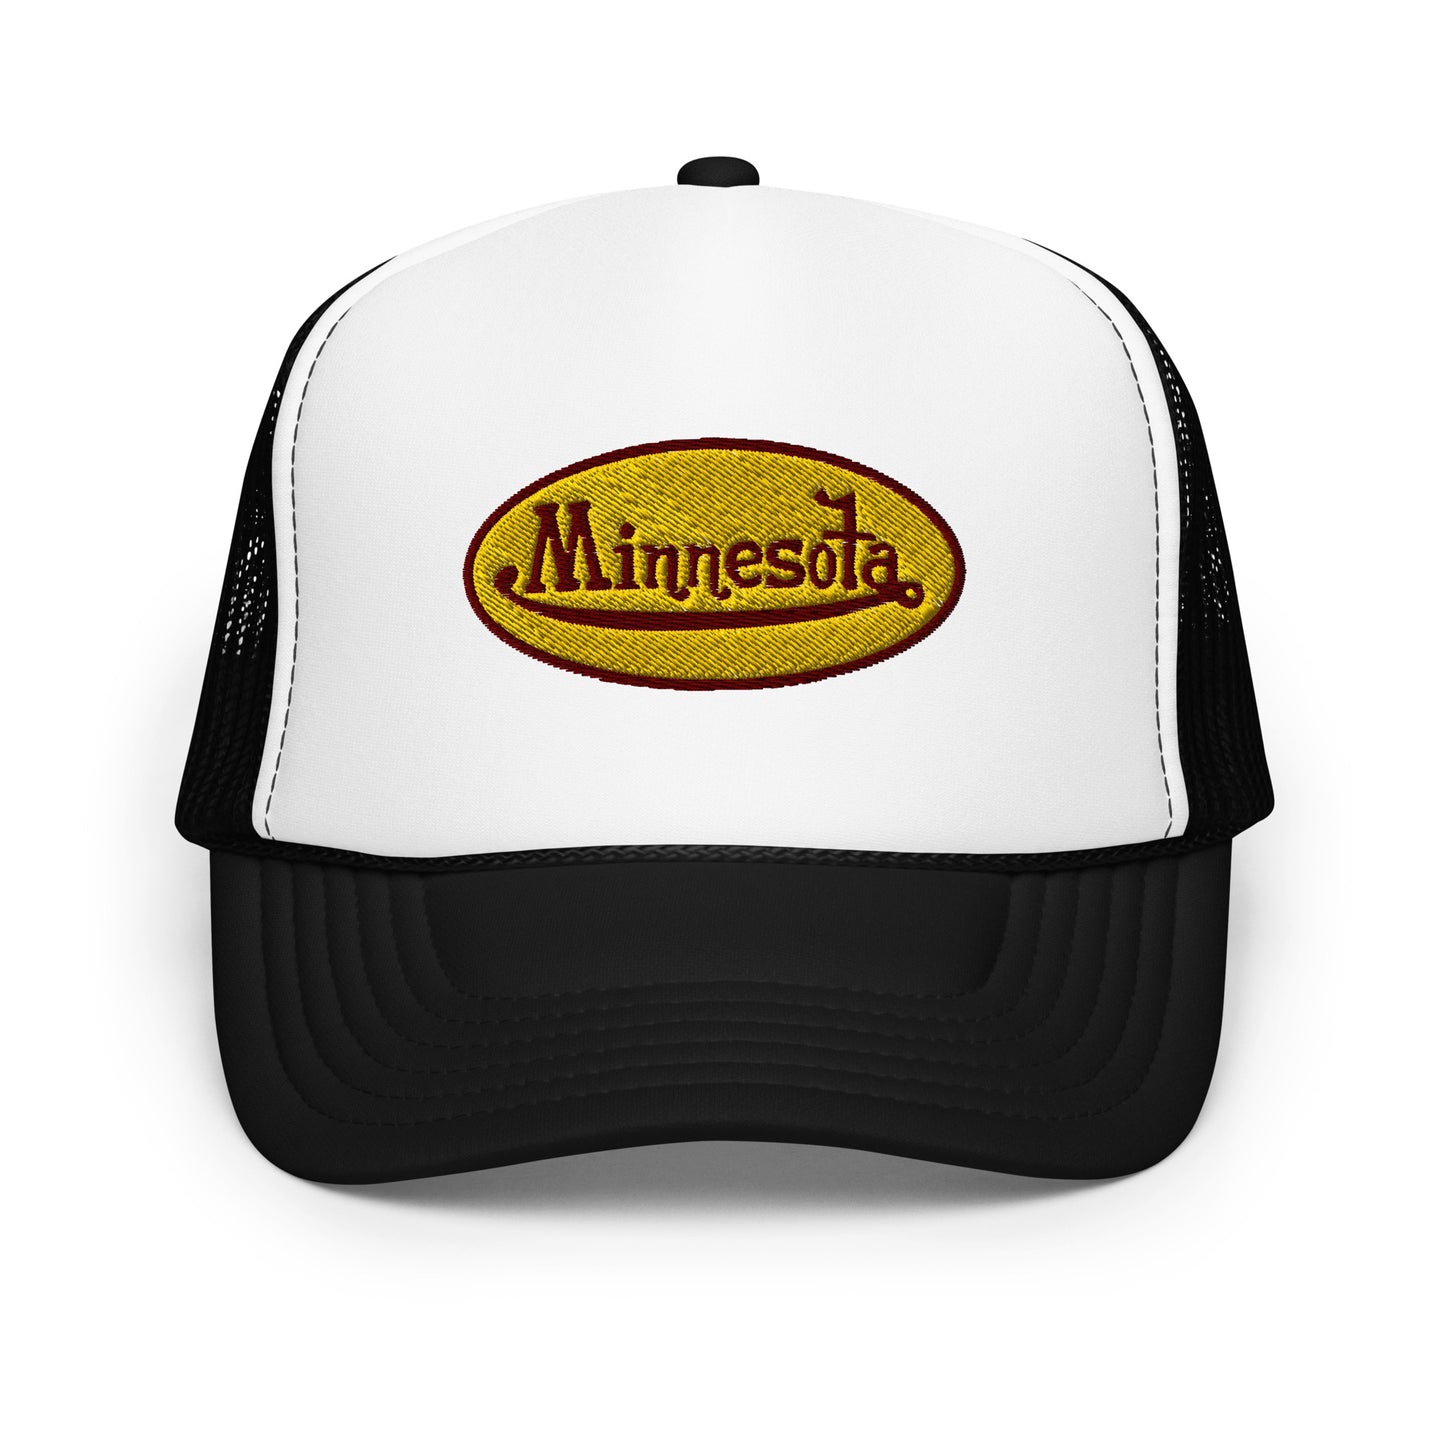 Minnesota Trucker Cap